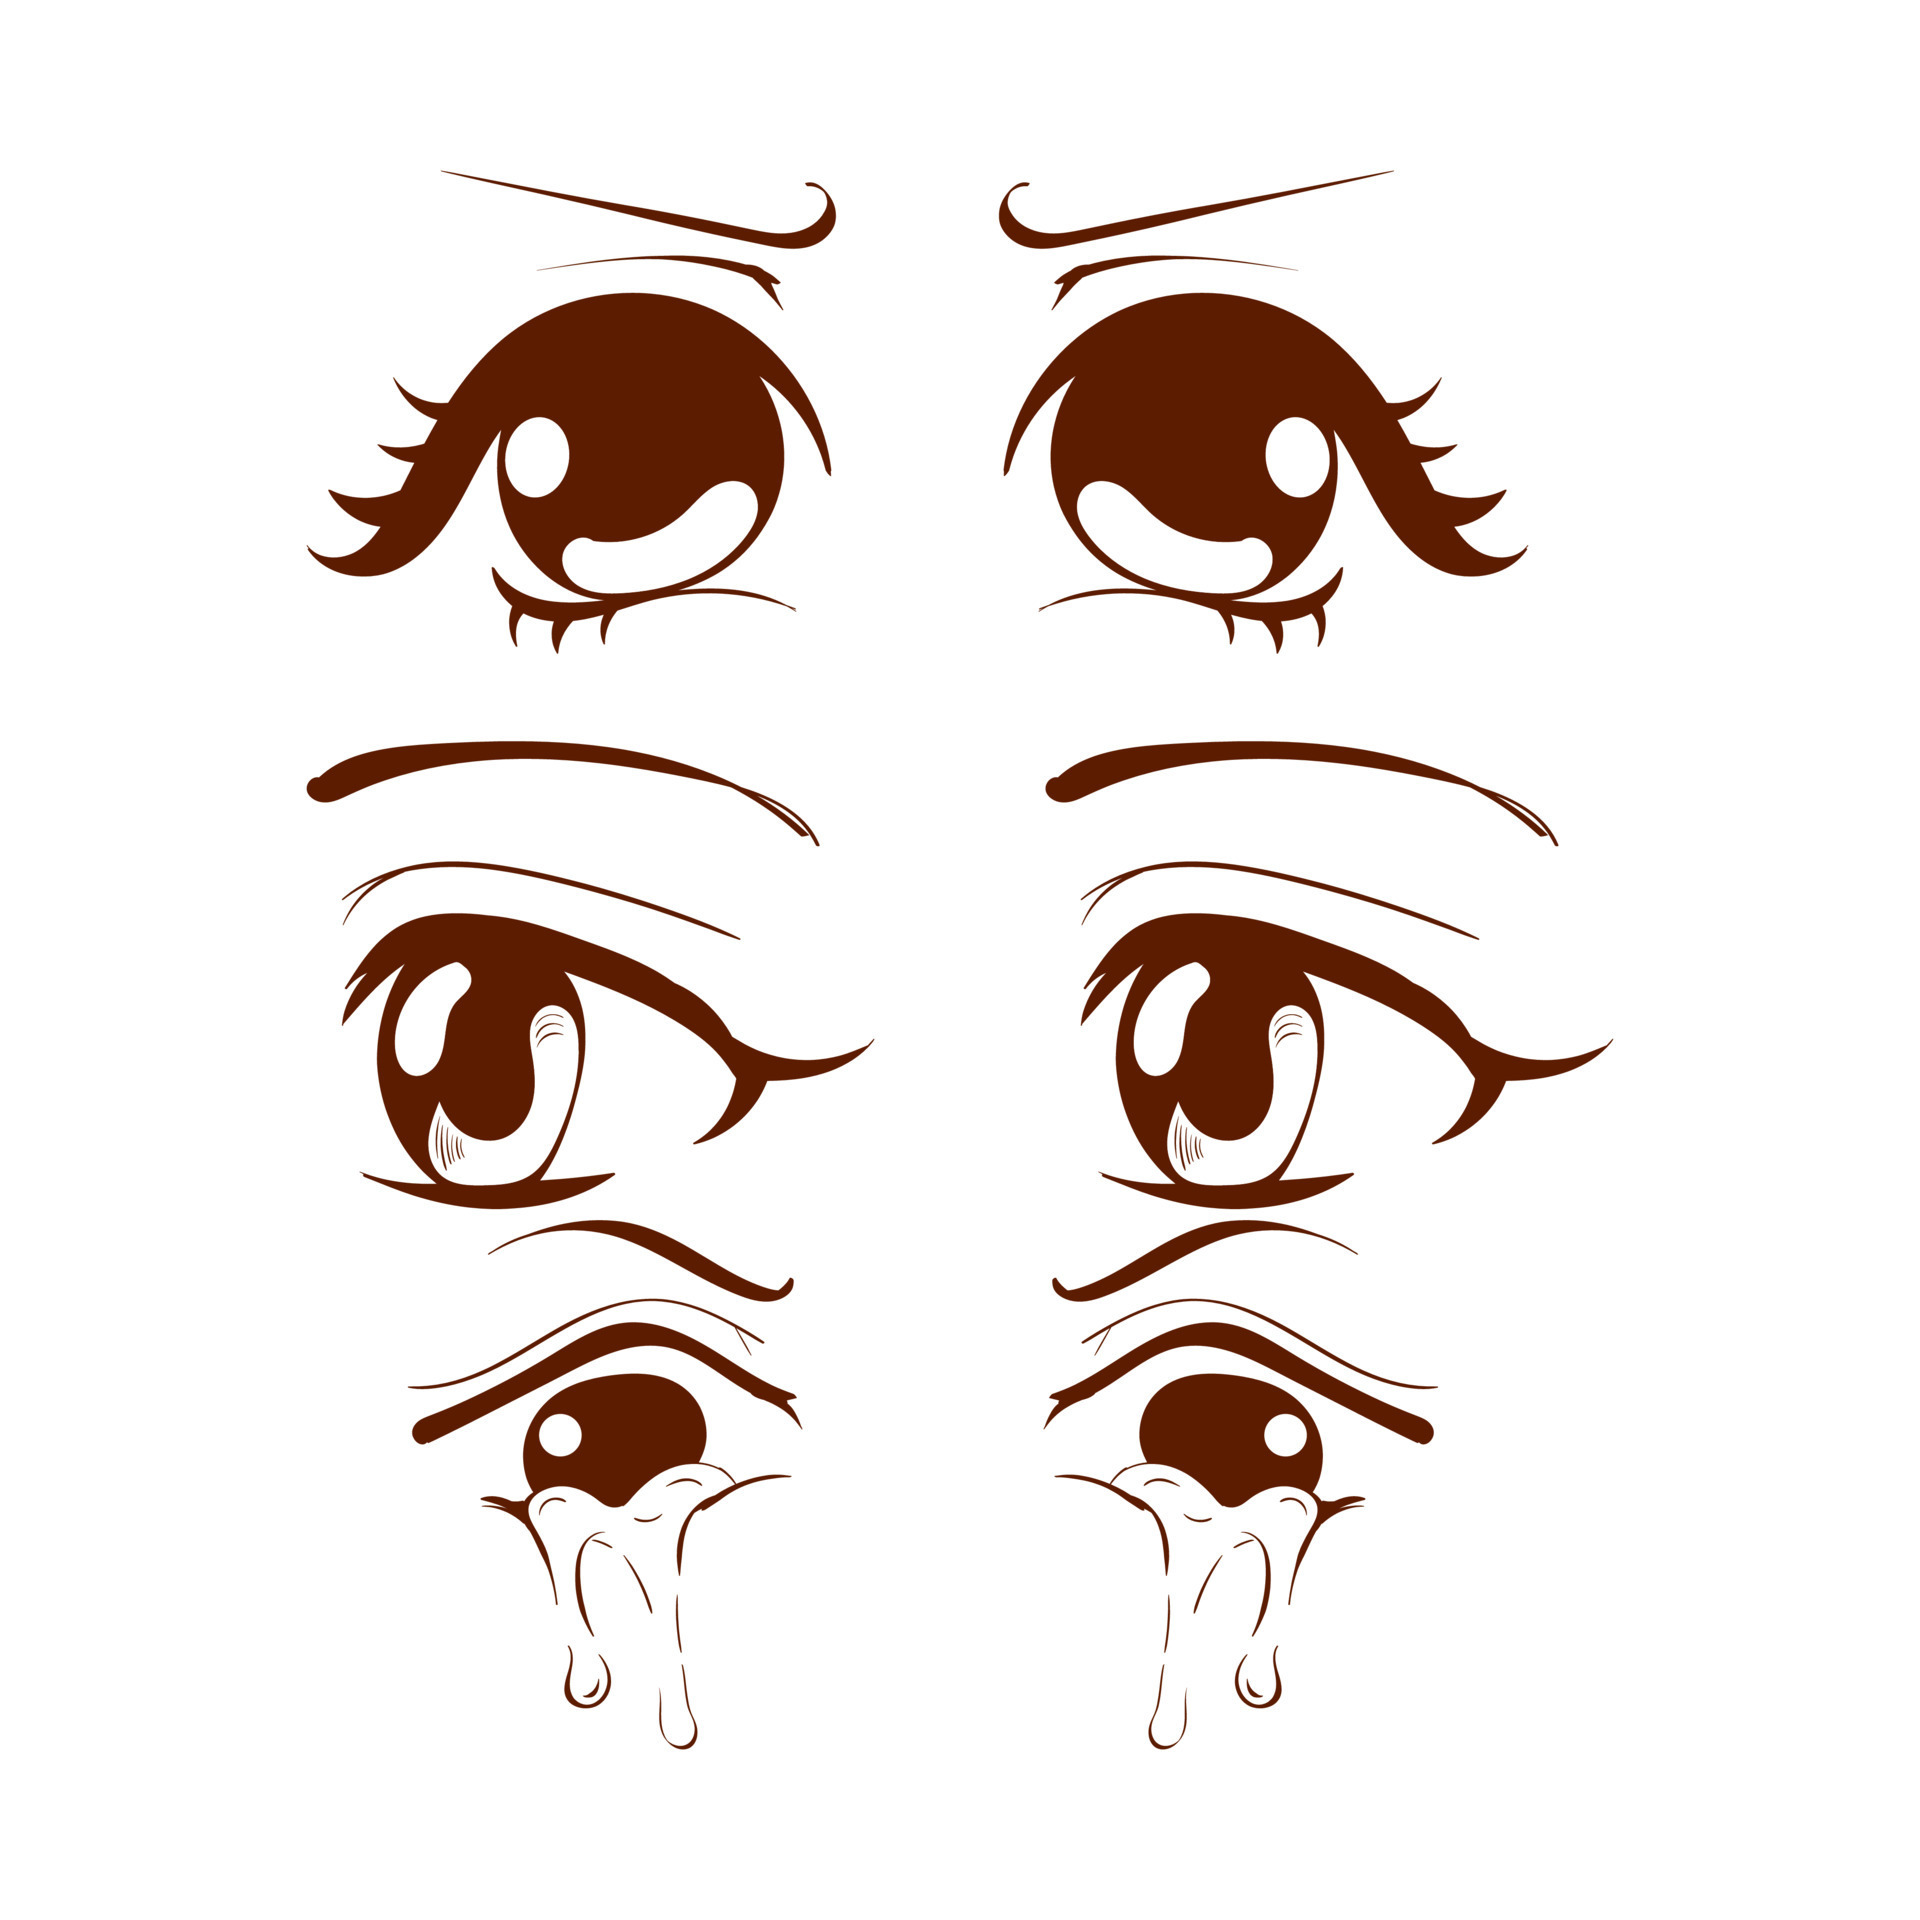 premium vector l drawing cute anime eyes. illustraion design